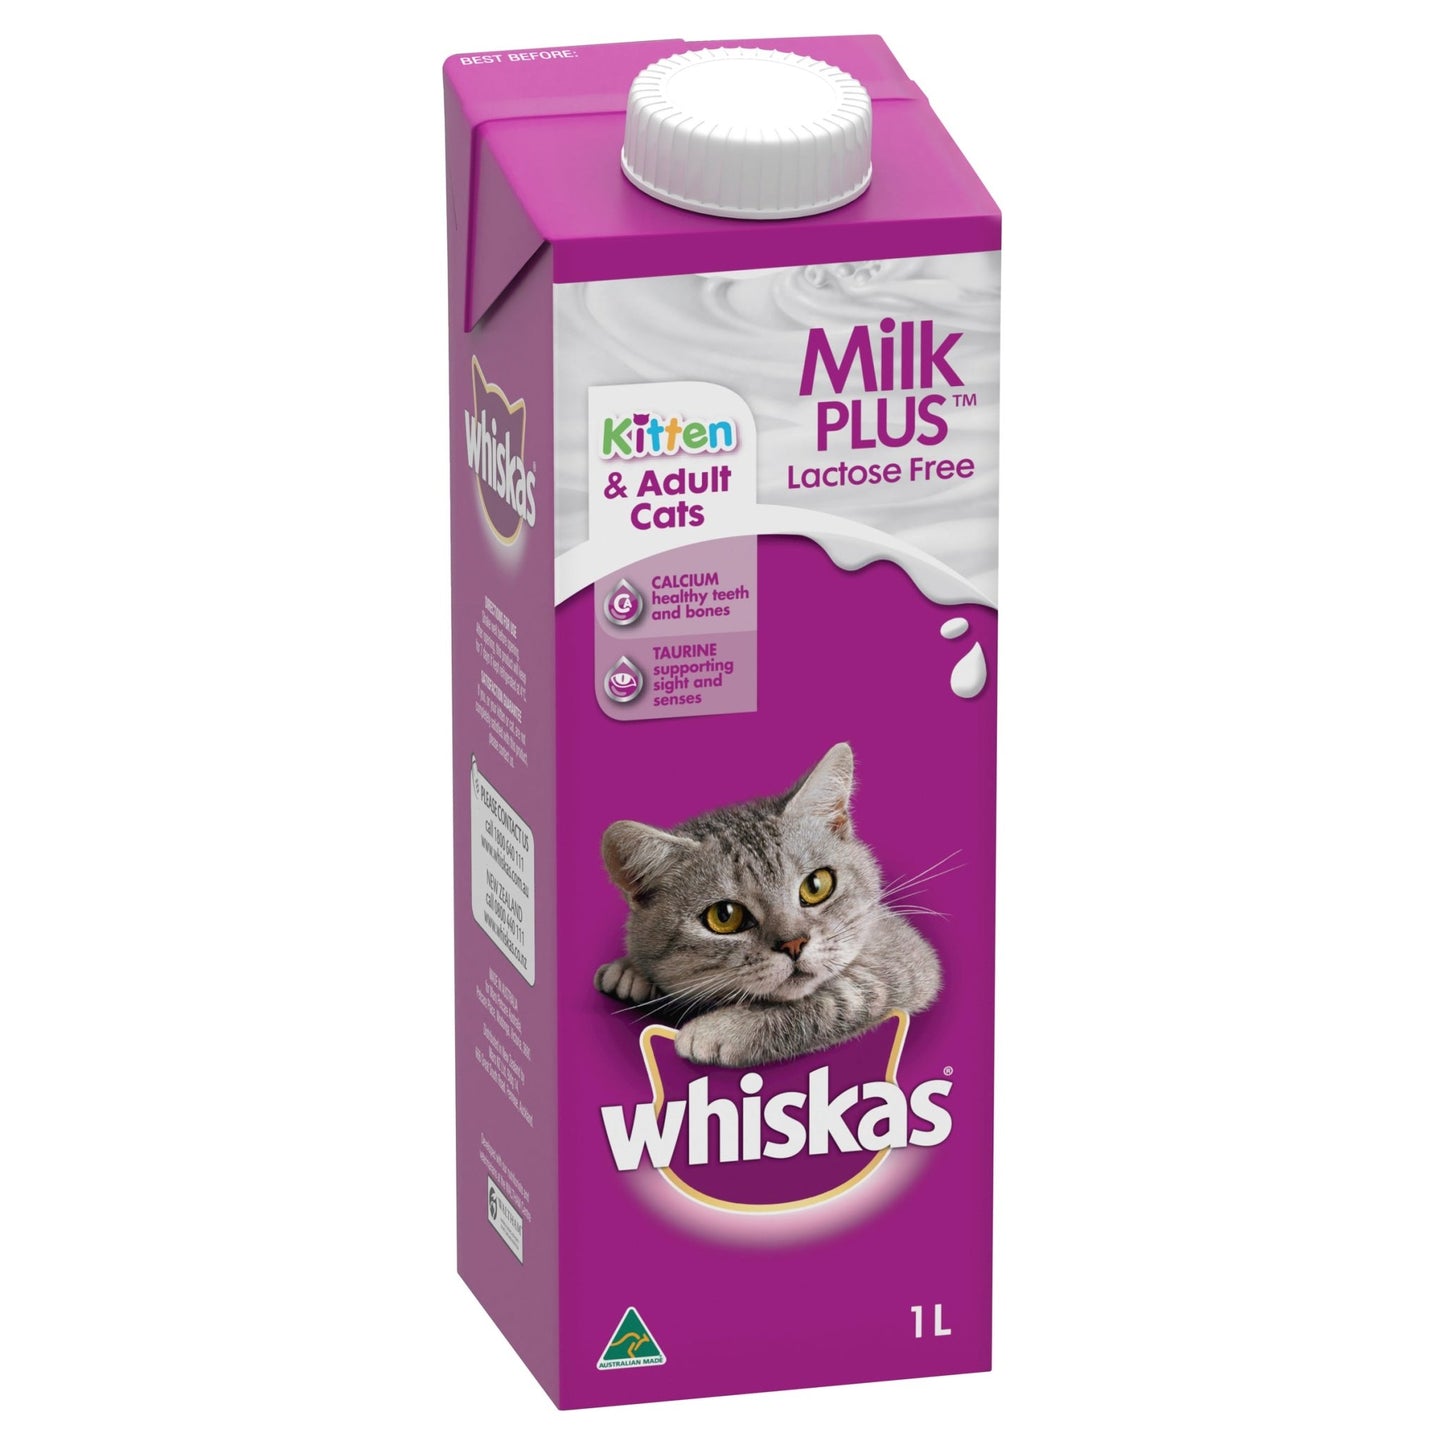 Whiskas Milk Plus 1 Litre - Woonona Petfood & Produce